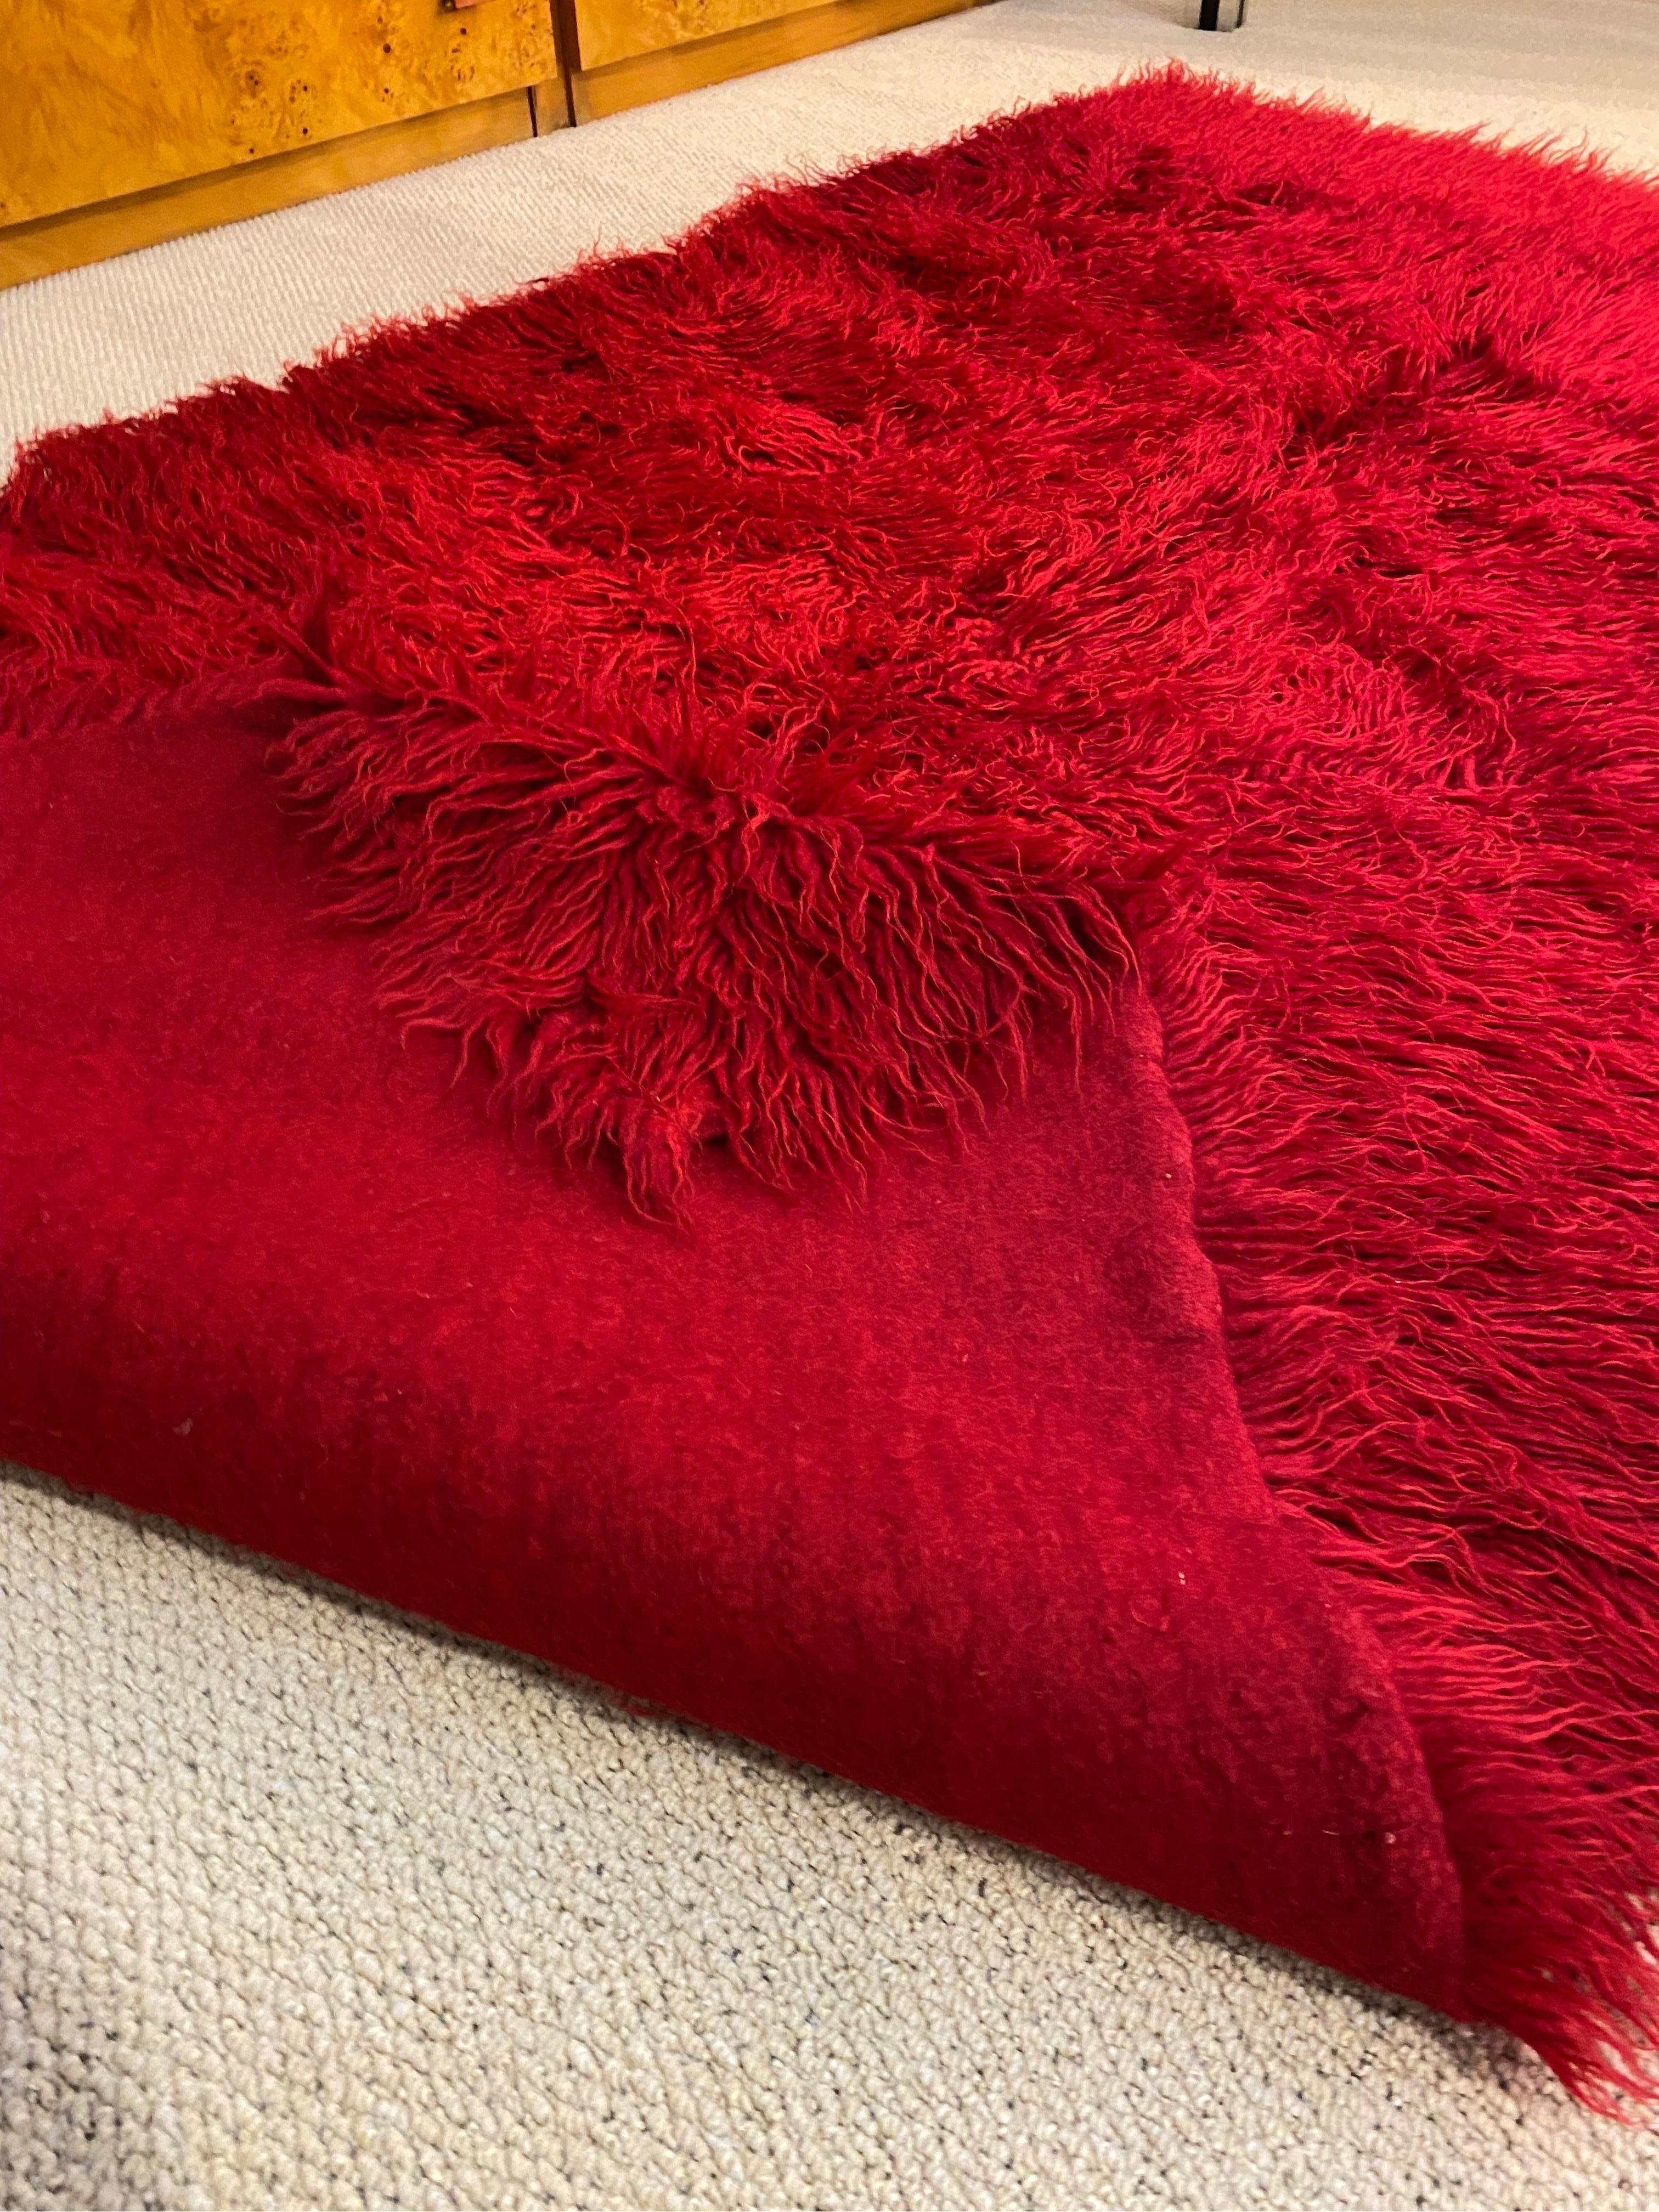 Mid-20th Century 1960s Wool Handwoven Red Rug Vintage Retro Folk Art Carpet Throw  For Sale